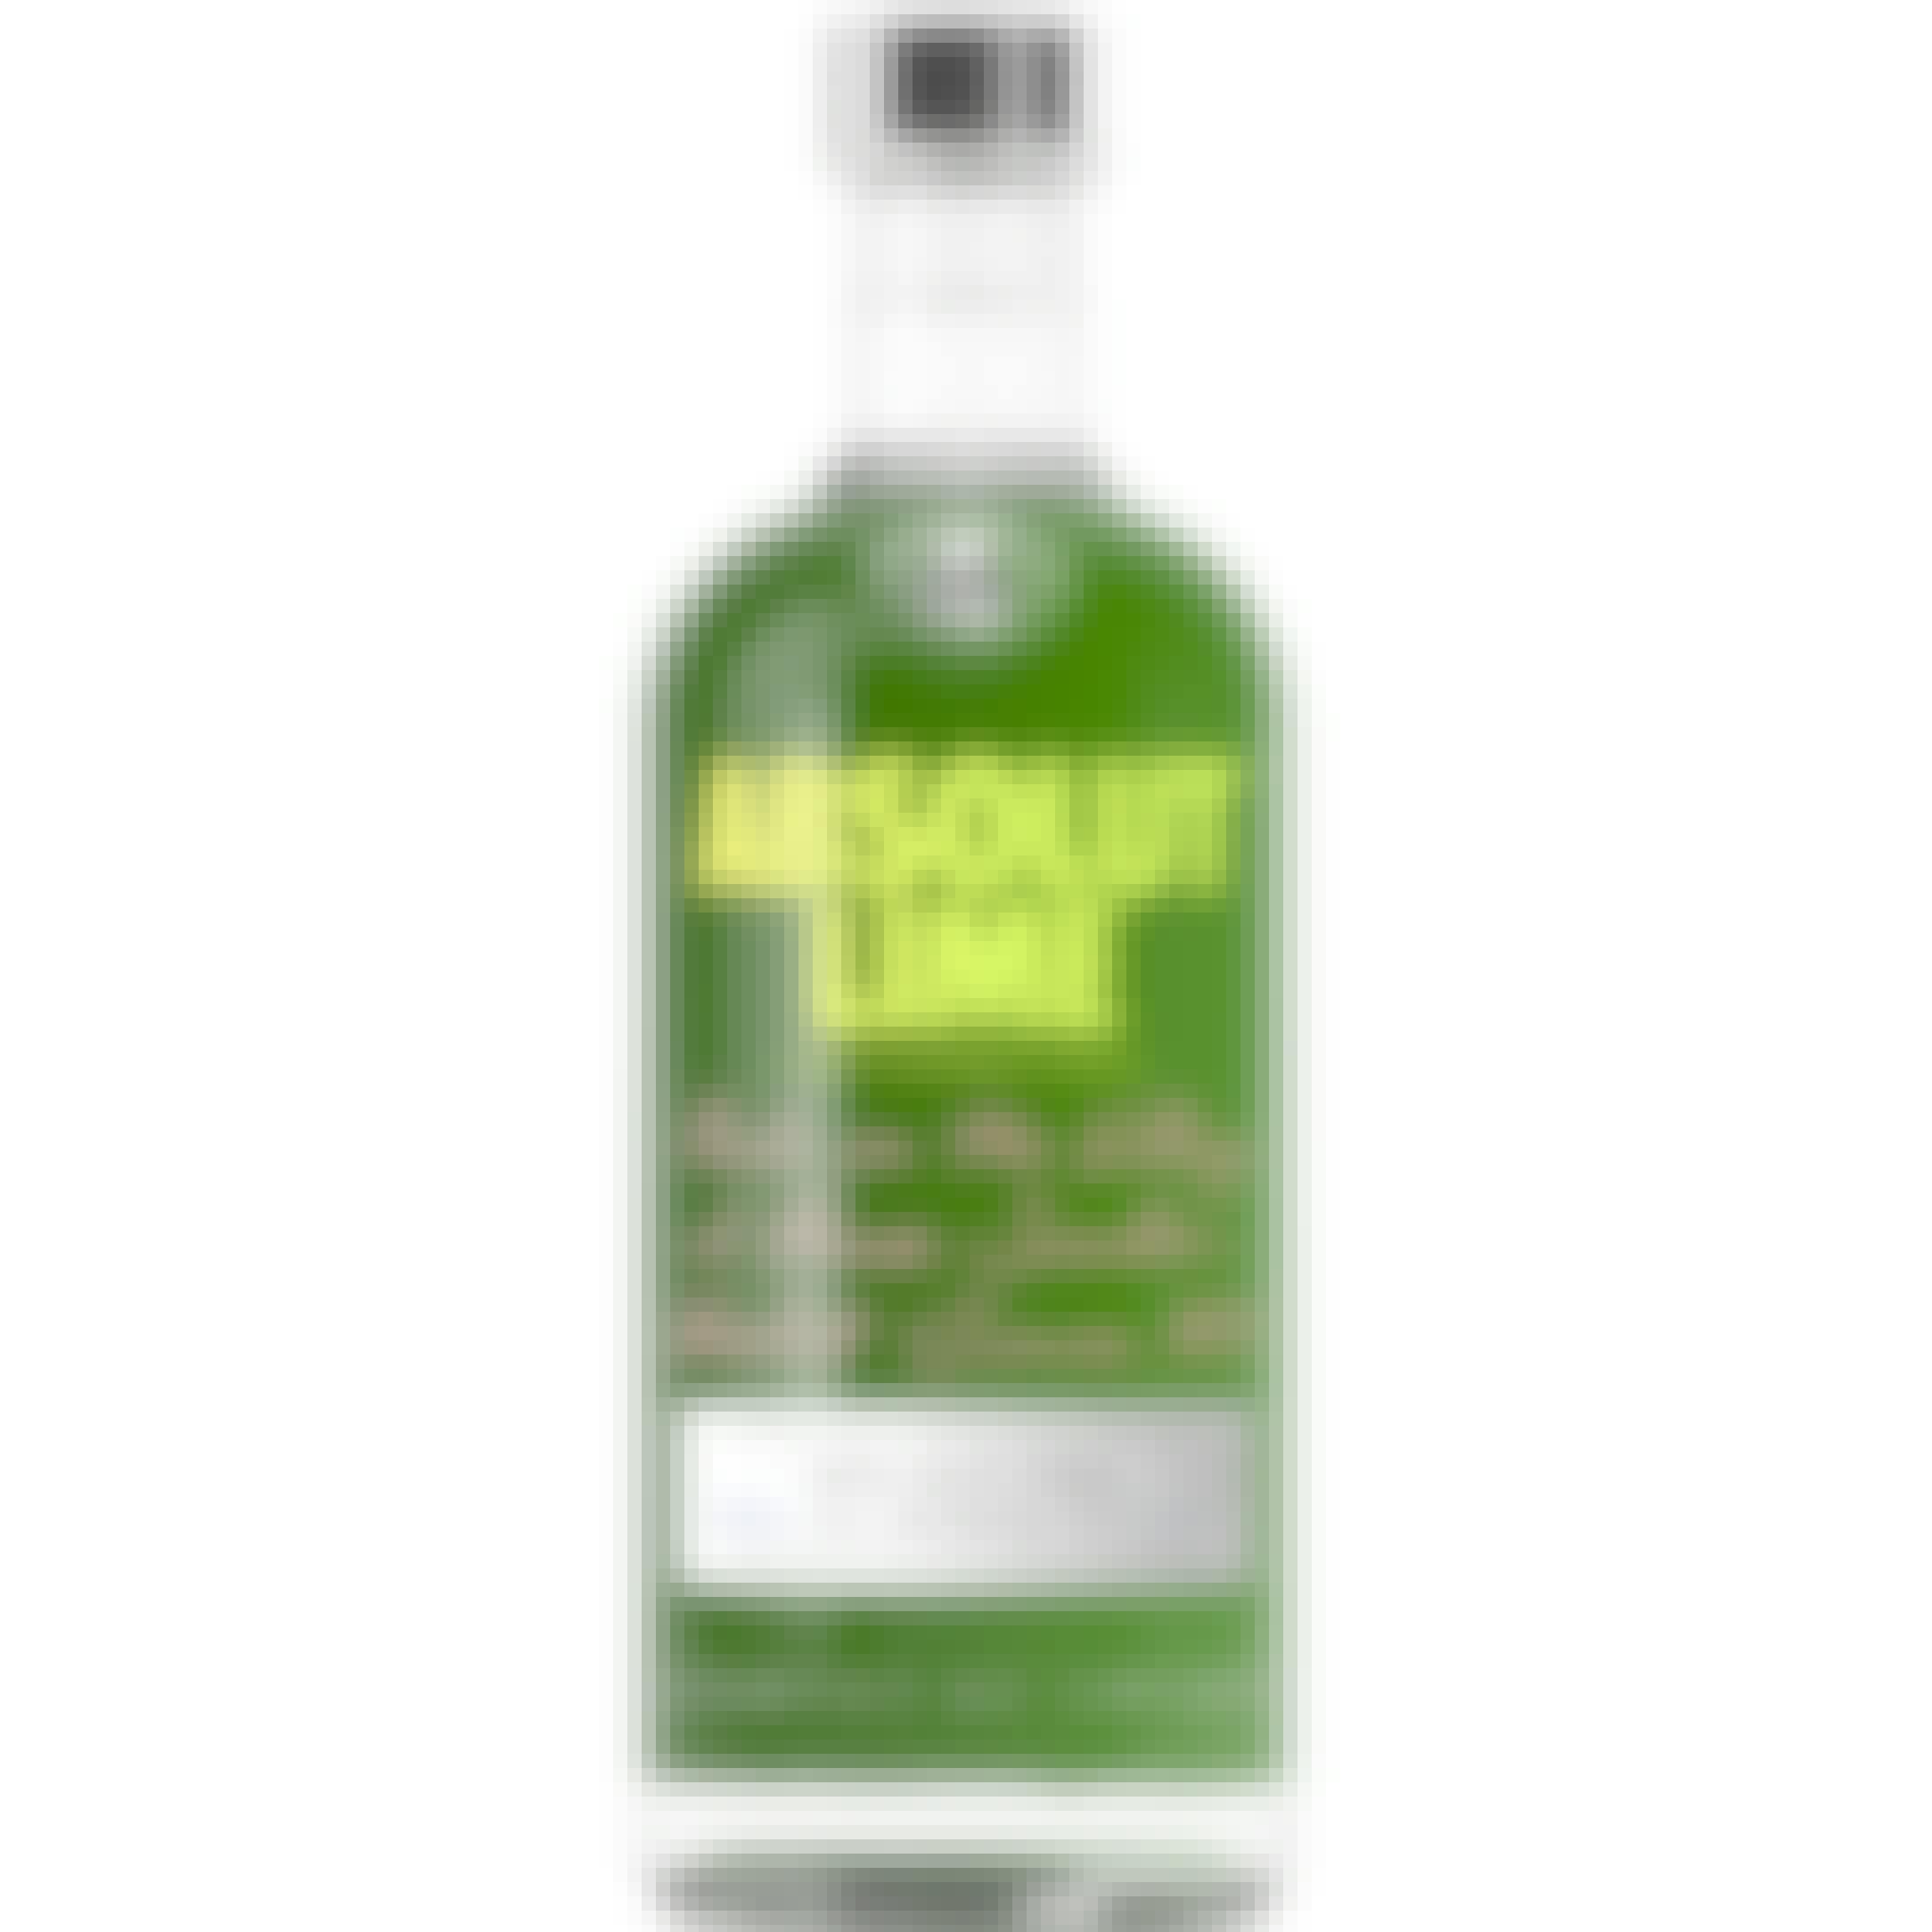 Absolut Lime Vodka 750ml